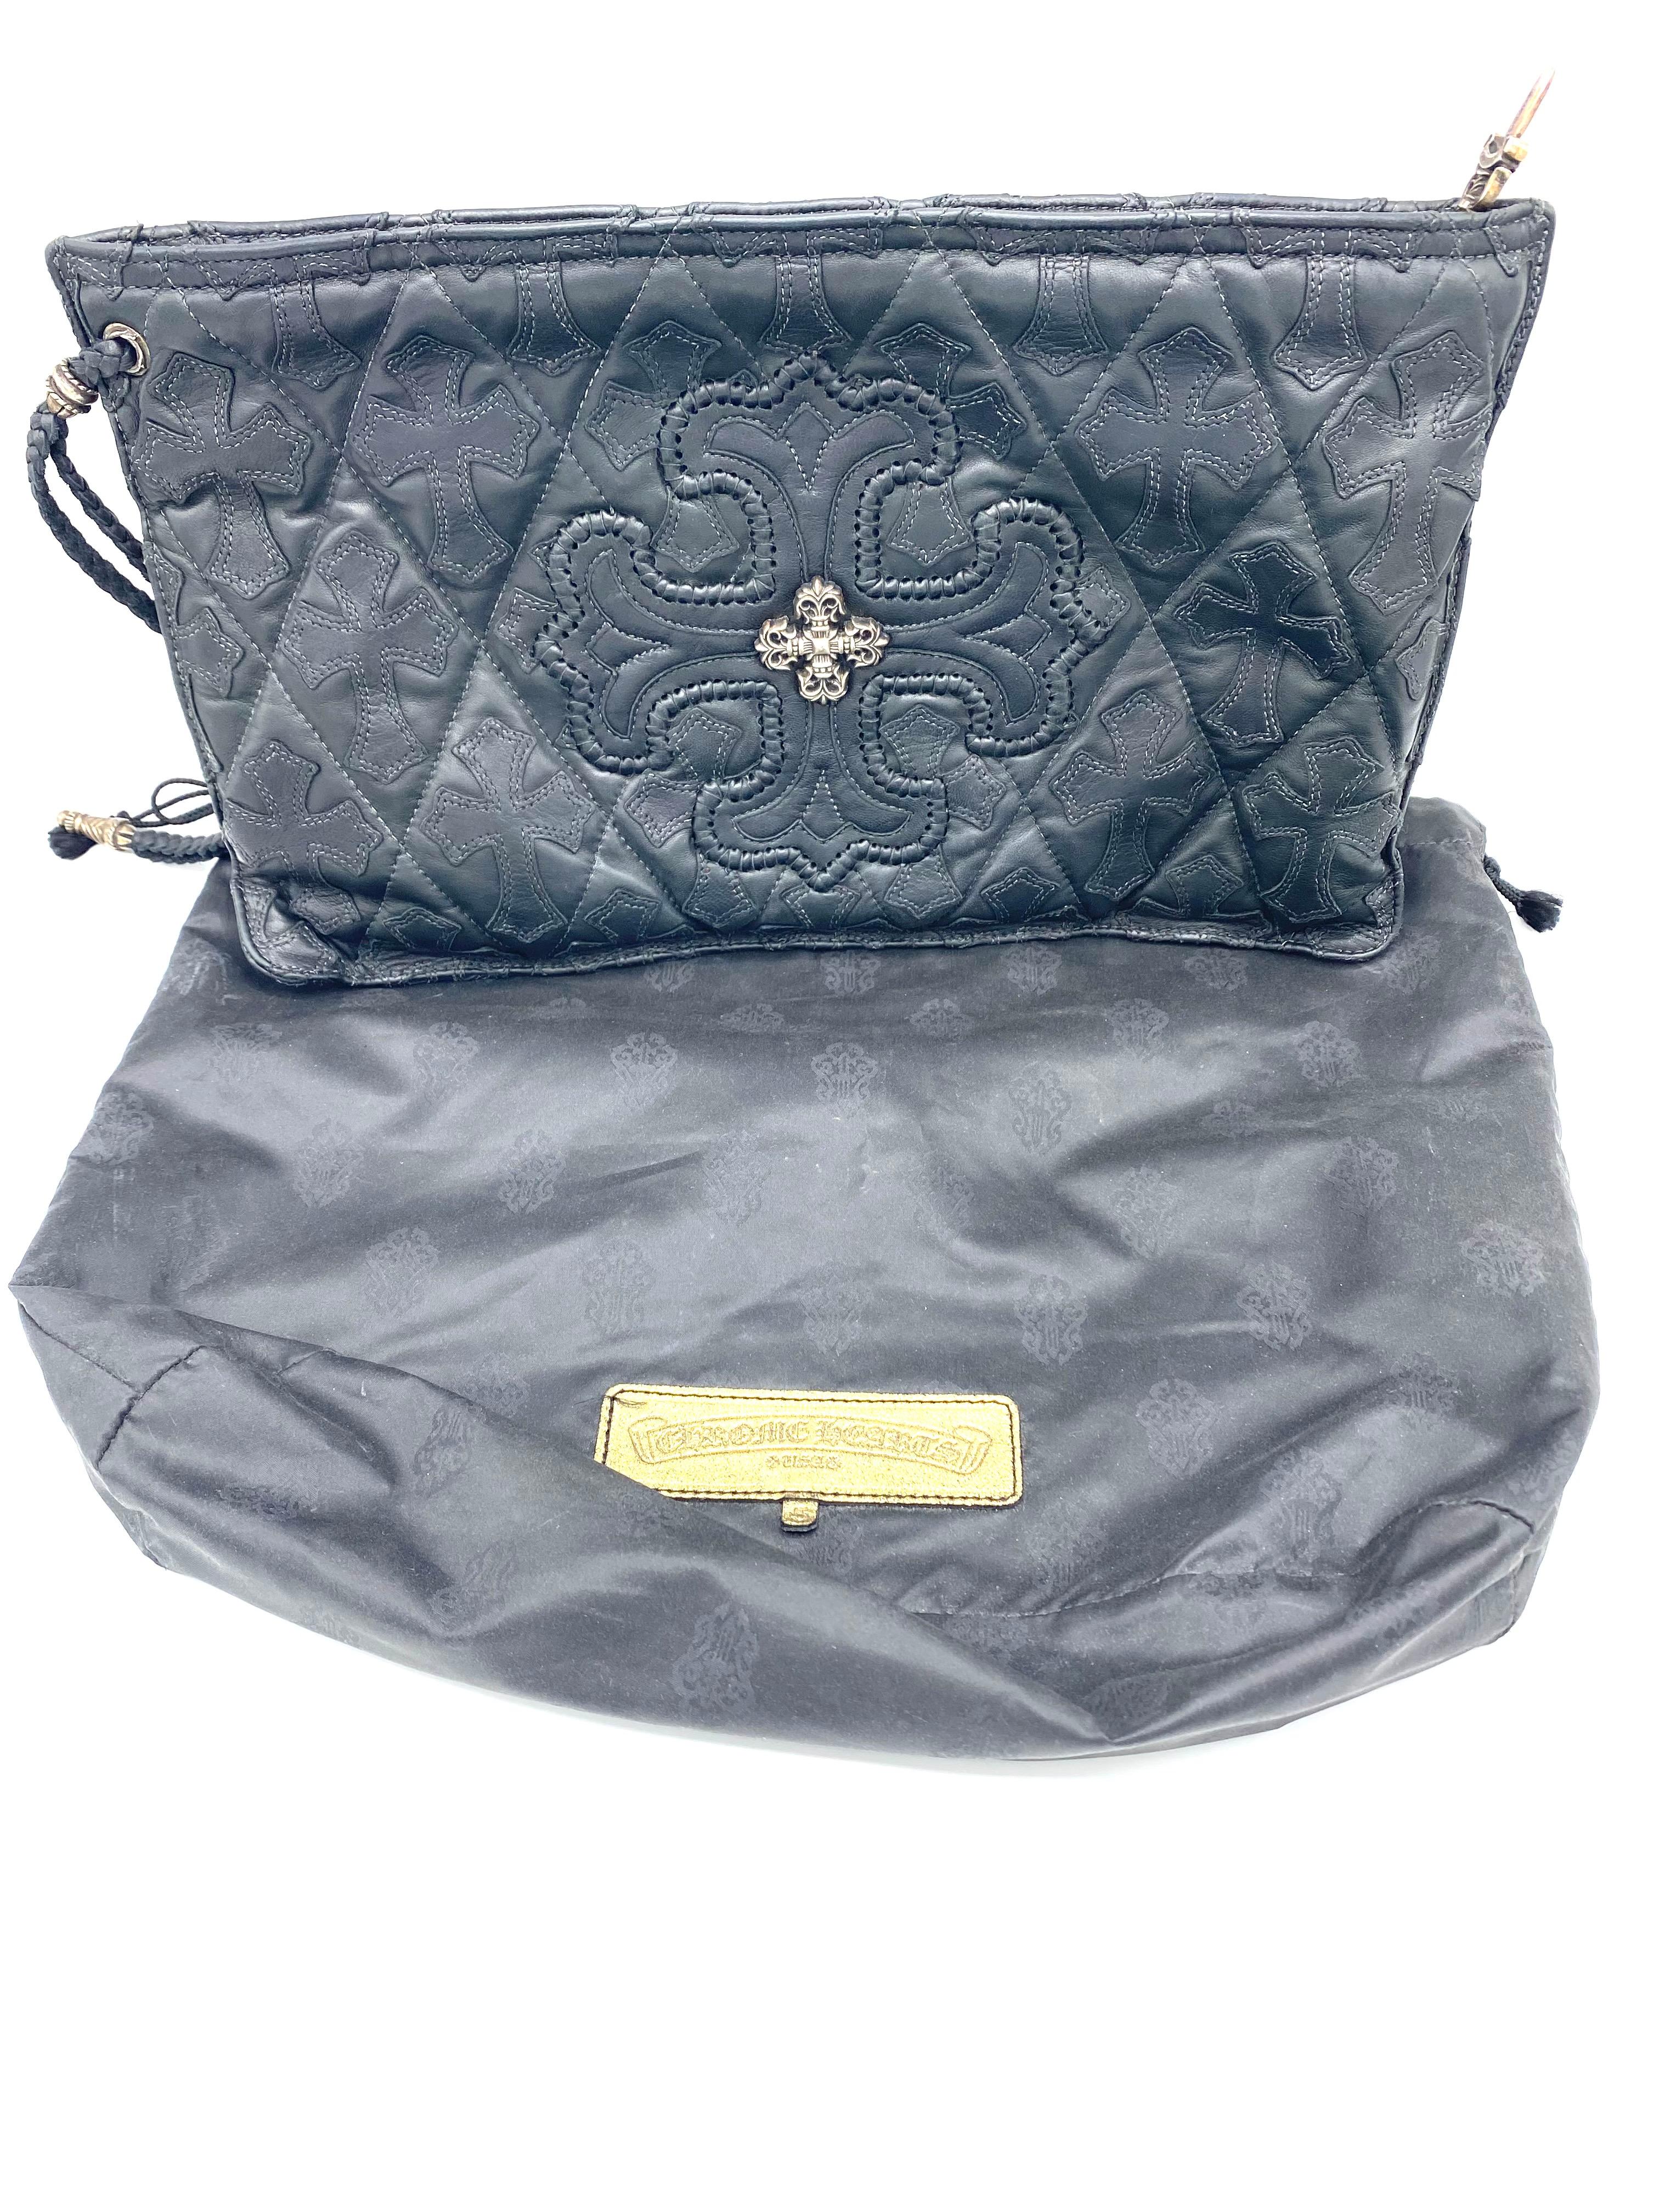 Vintage Chrome Hearts Black Leather and Sterling Silver Clutch Handbag  2